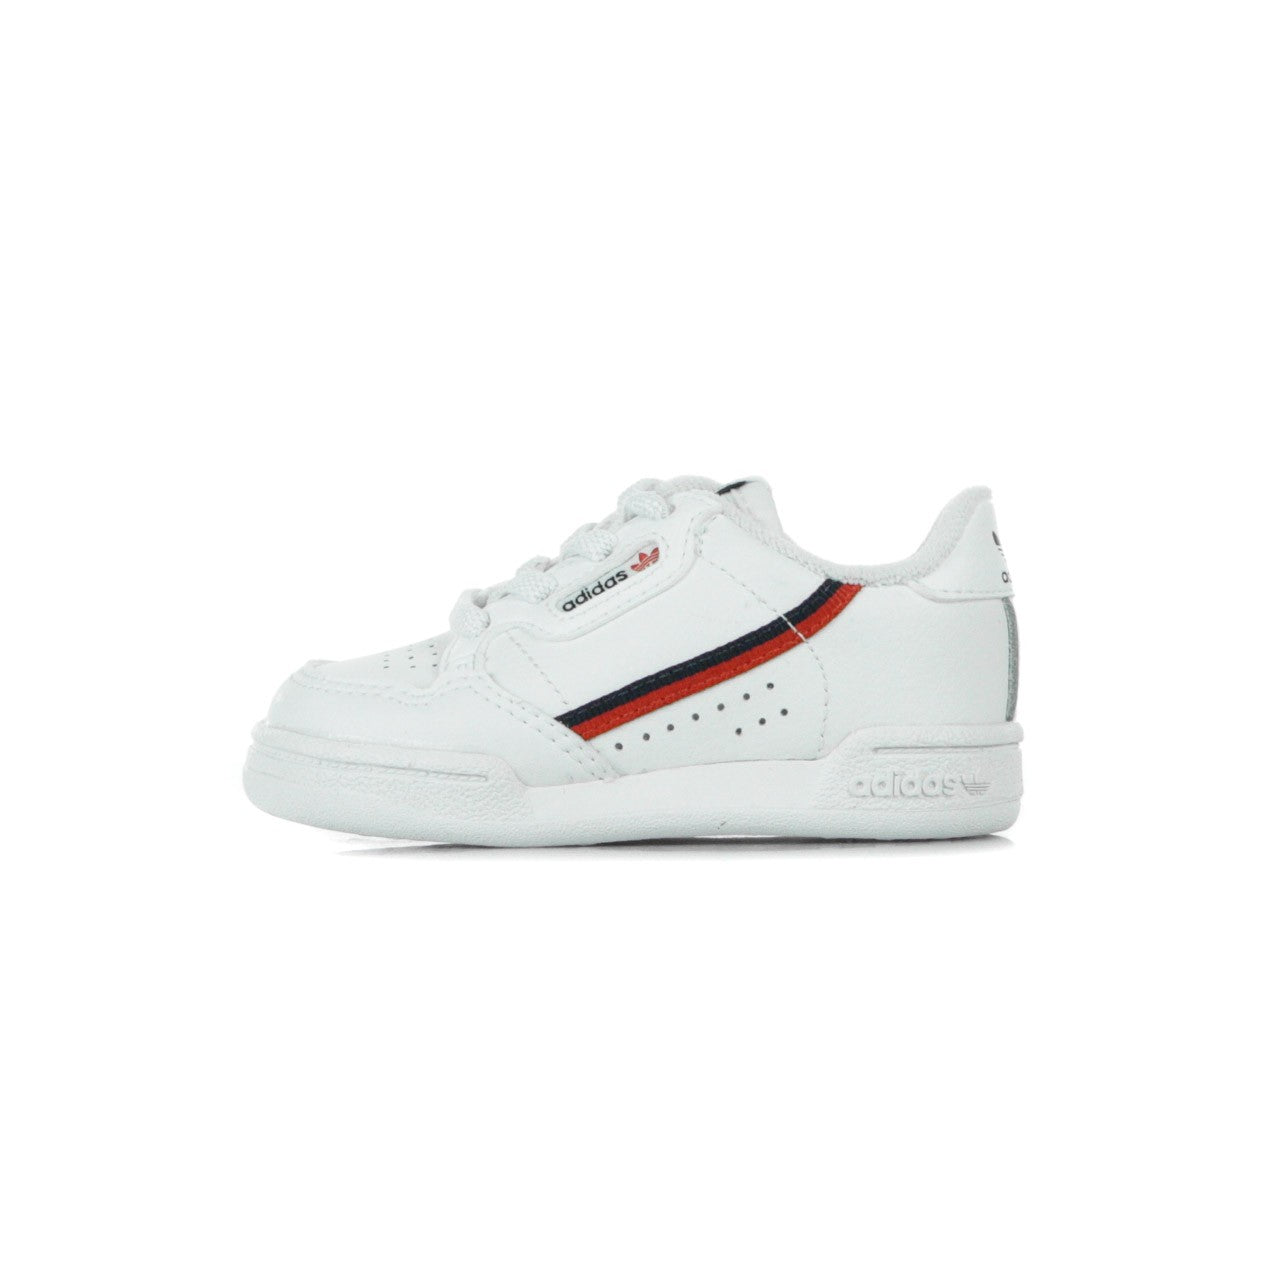 Adidas, Scarpa Bassa Bambino Continental 80 El I, White/scarlet/collegiate Navy